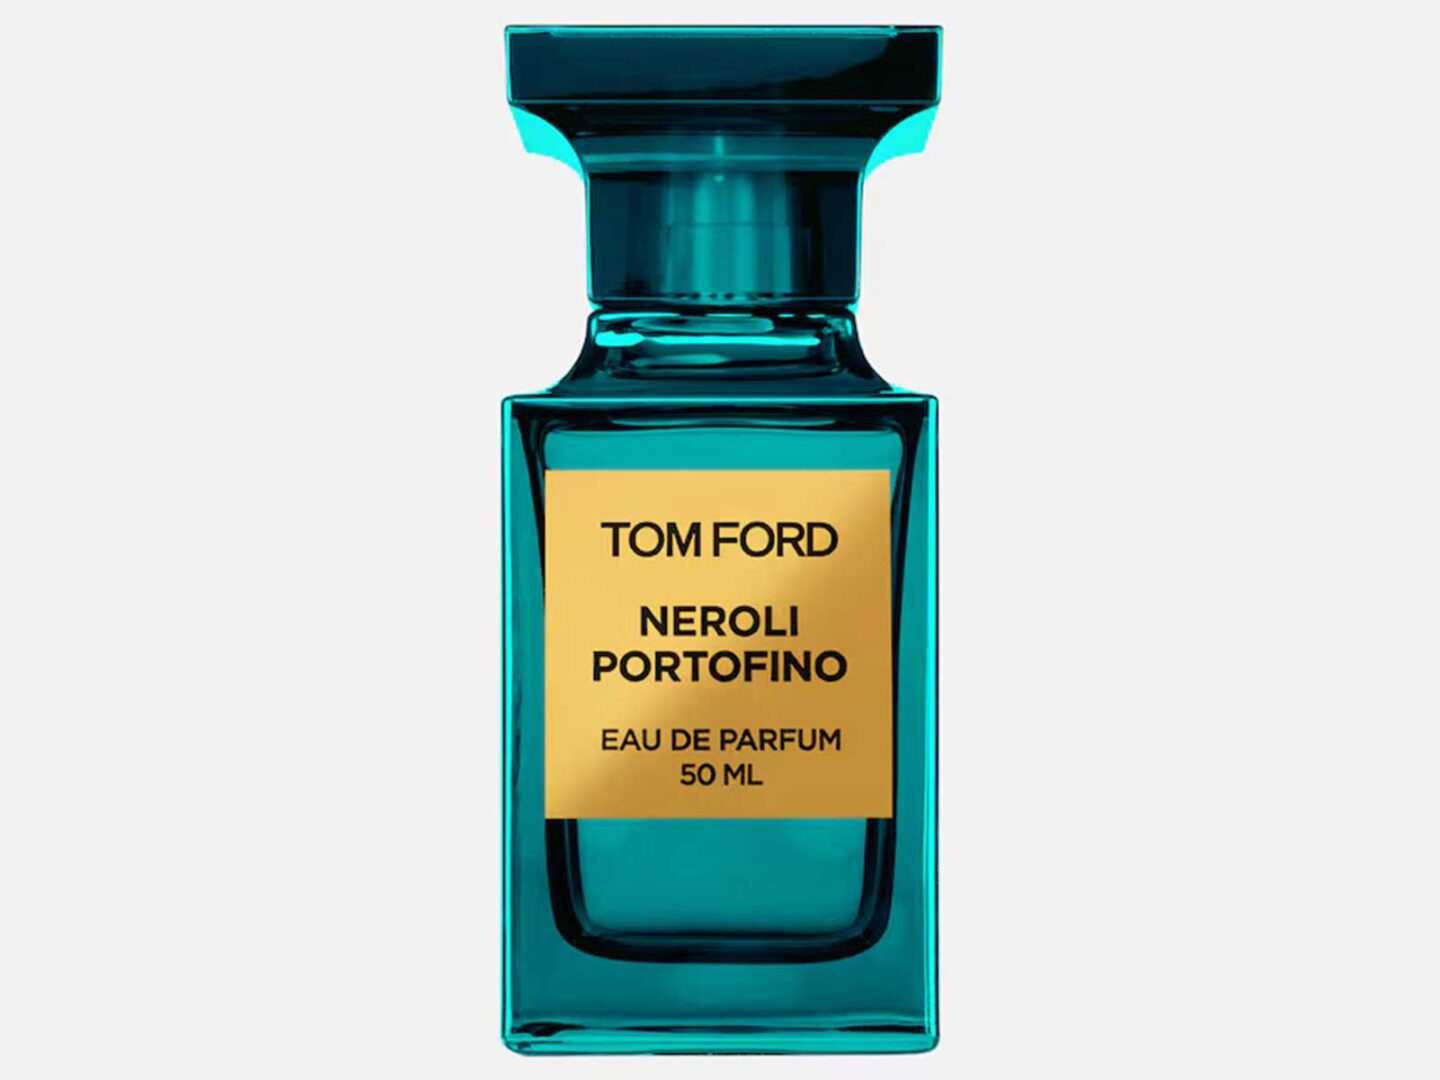 Tom Ford Beauty lanza su nuevo perfume: Neroli Portofino